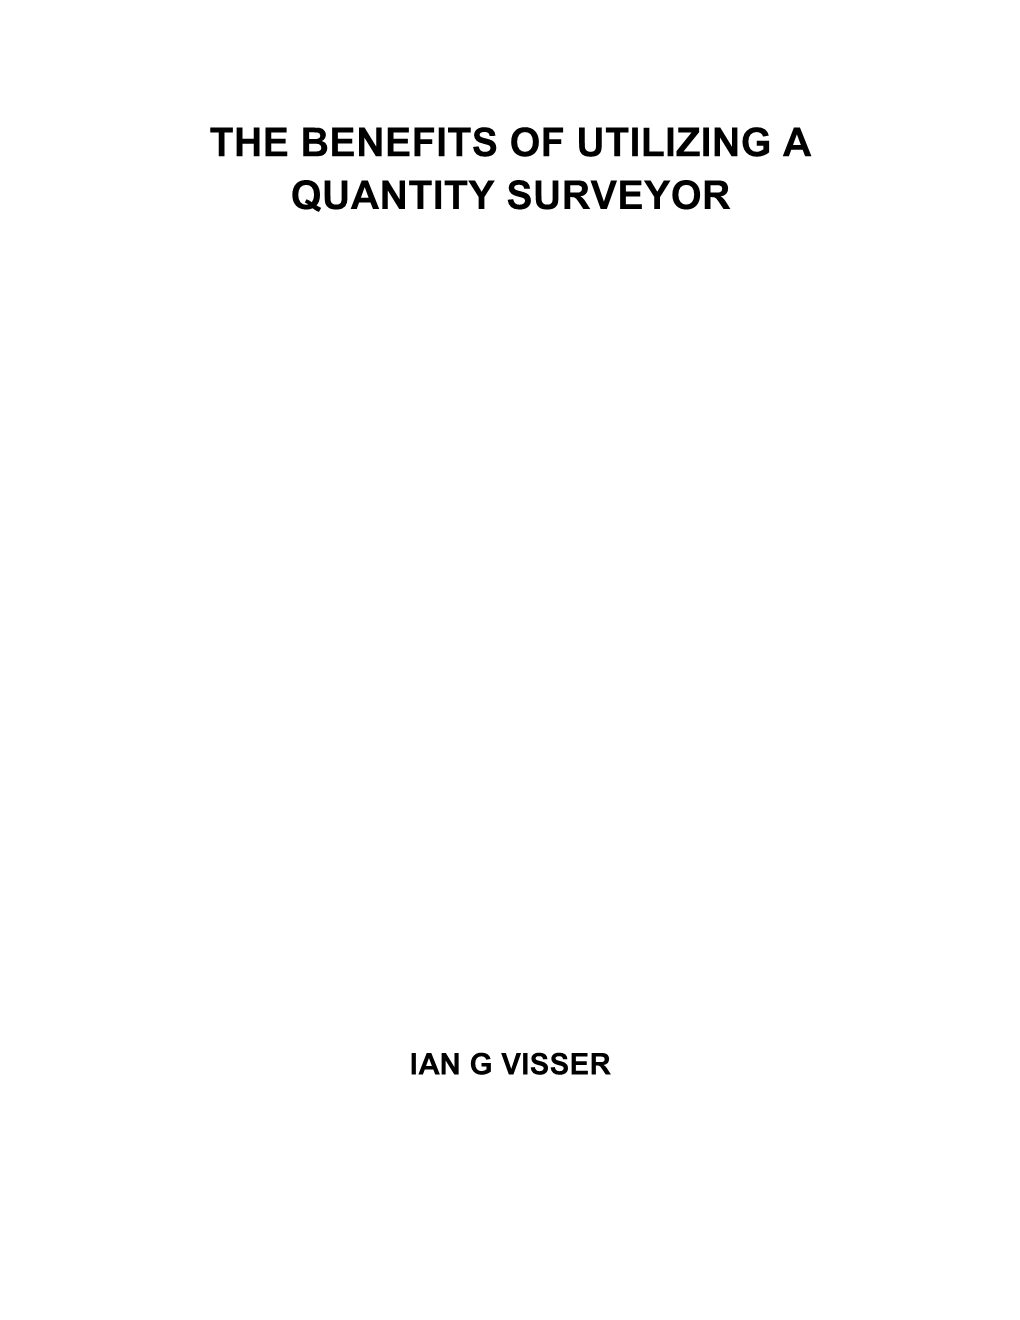 The Benefits of Utilizing a Quantity Surveyor